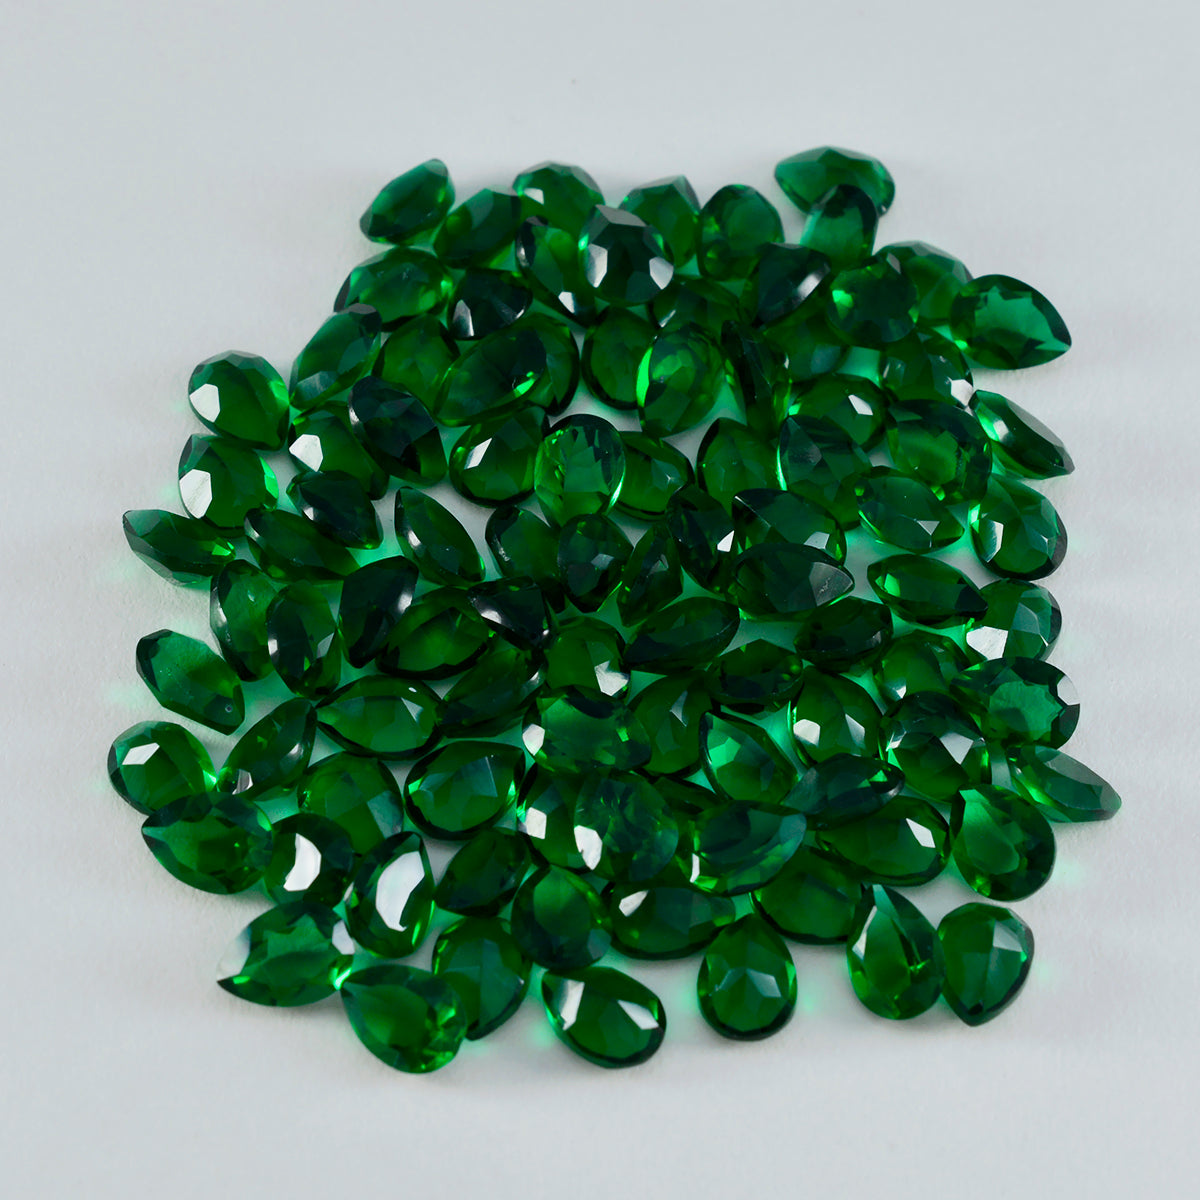 Riyogems 1 Stück grüner Smaragd, CZ, facettiert, 4 x 6 mm, Birnenform, hübscher, hochwertiger, loser Edelstein